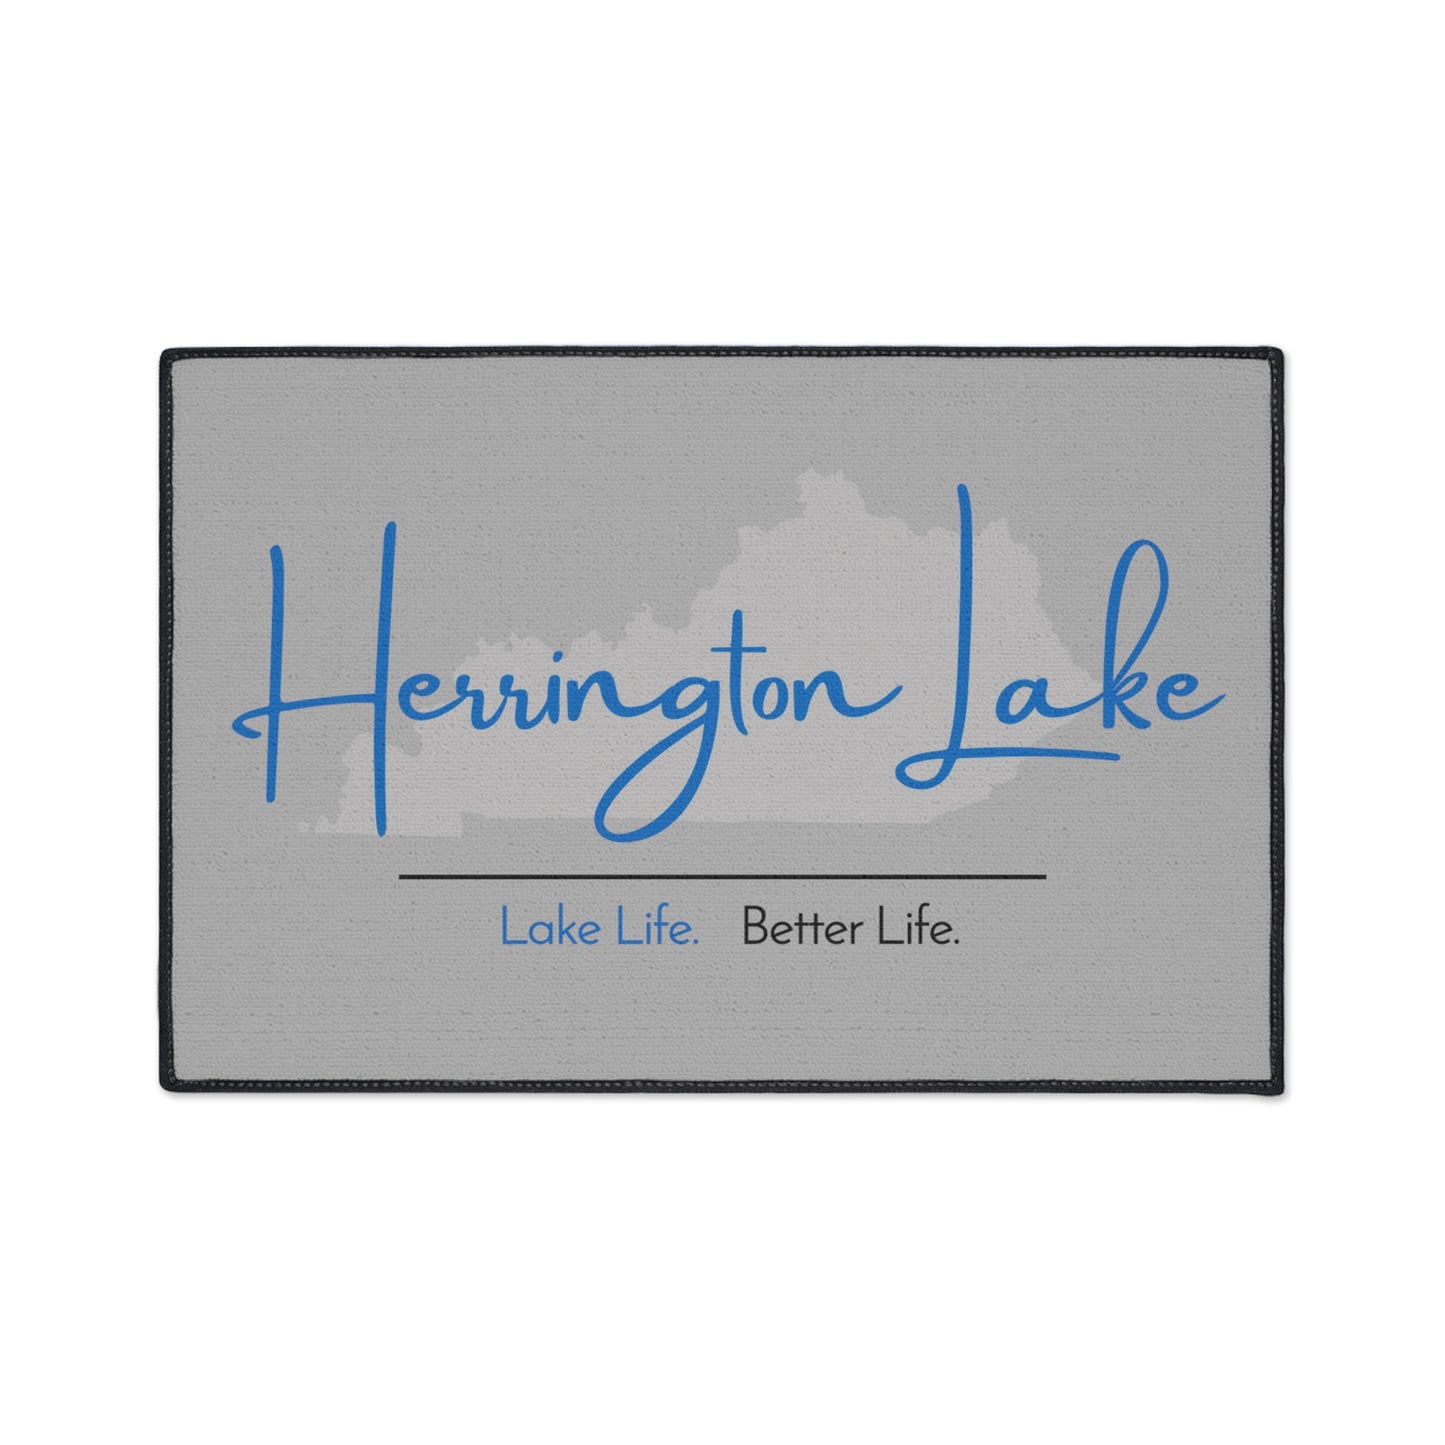 Herrington Lake Signature Collection Heavy Duty Floor Mat, Light Grey